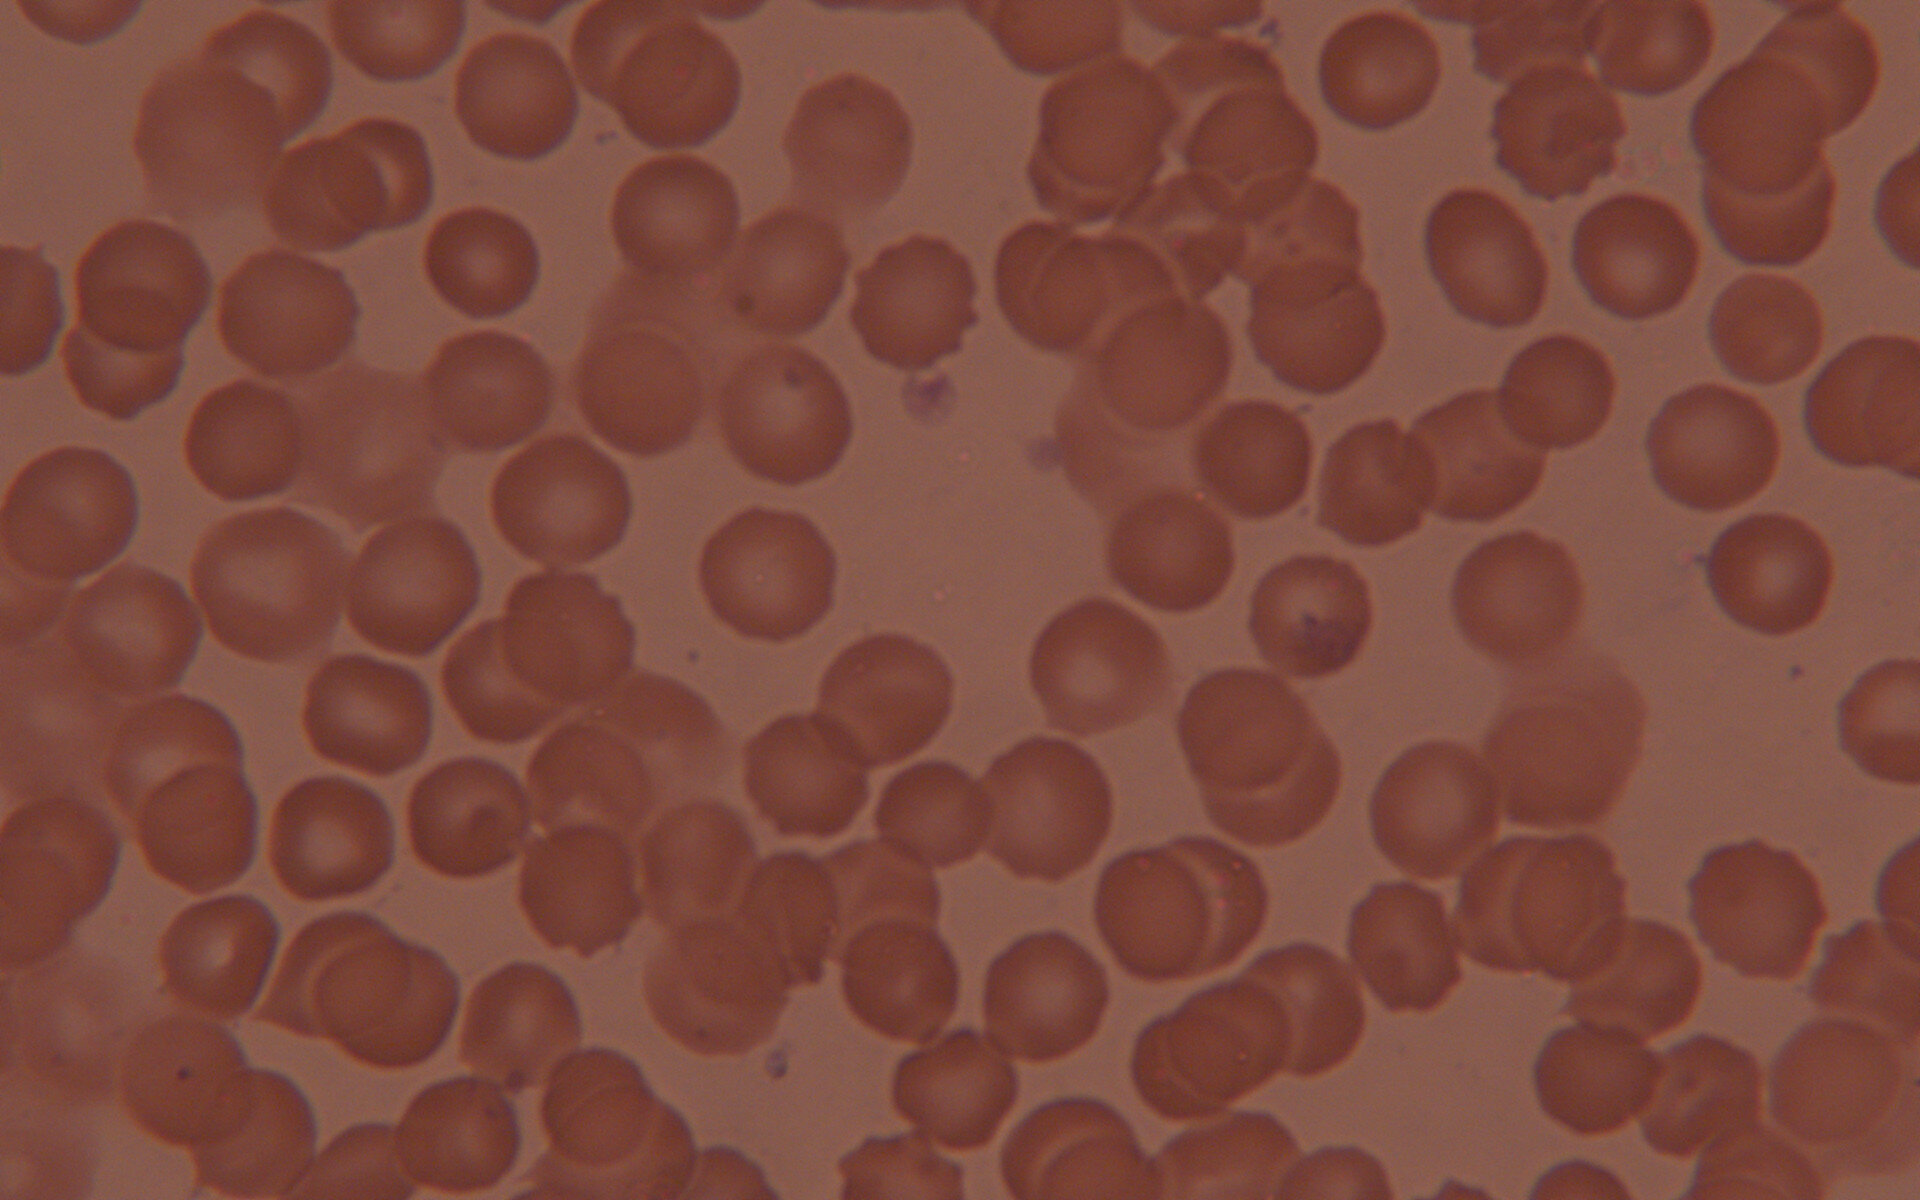 Red blood cells undergoing hemolysis after hypergravity exposure